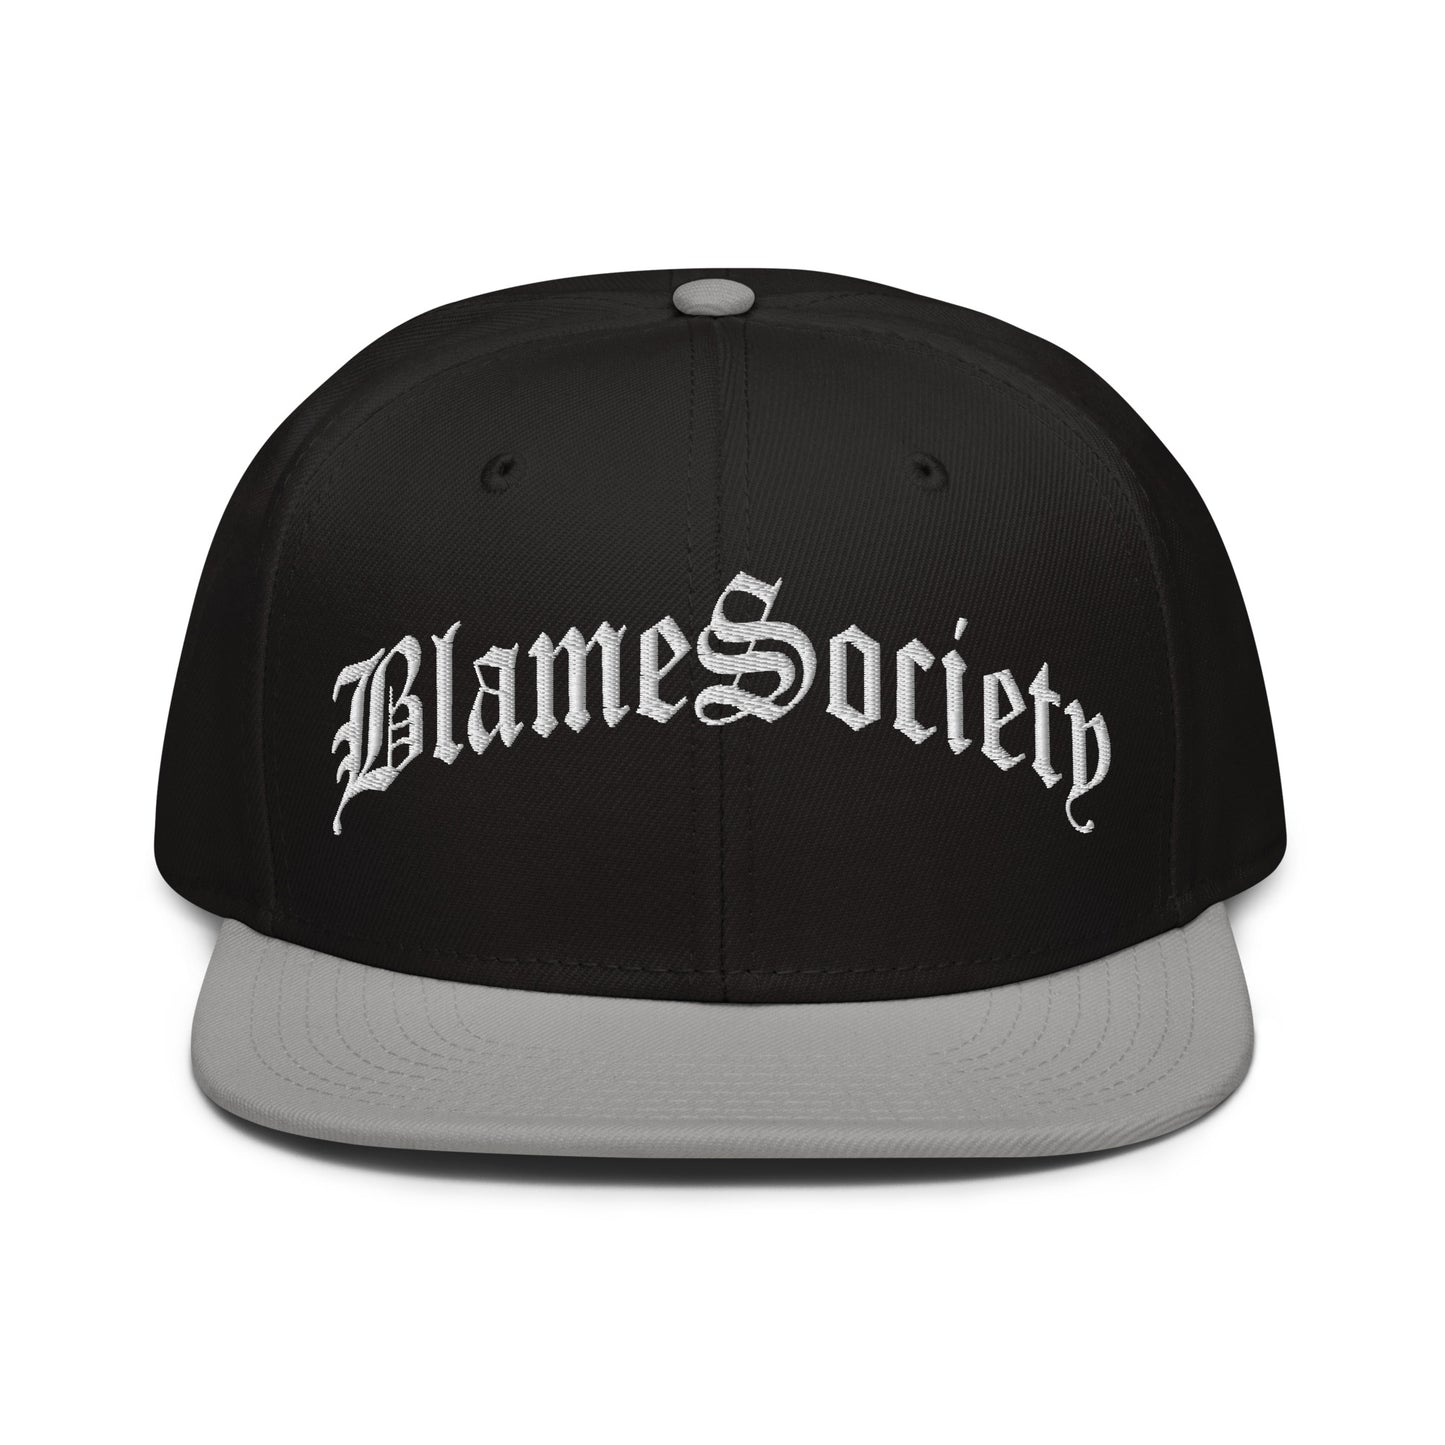 Blame Society snapback hat